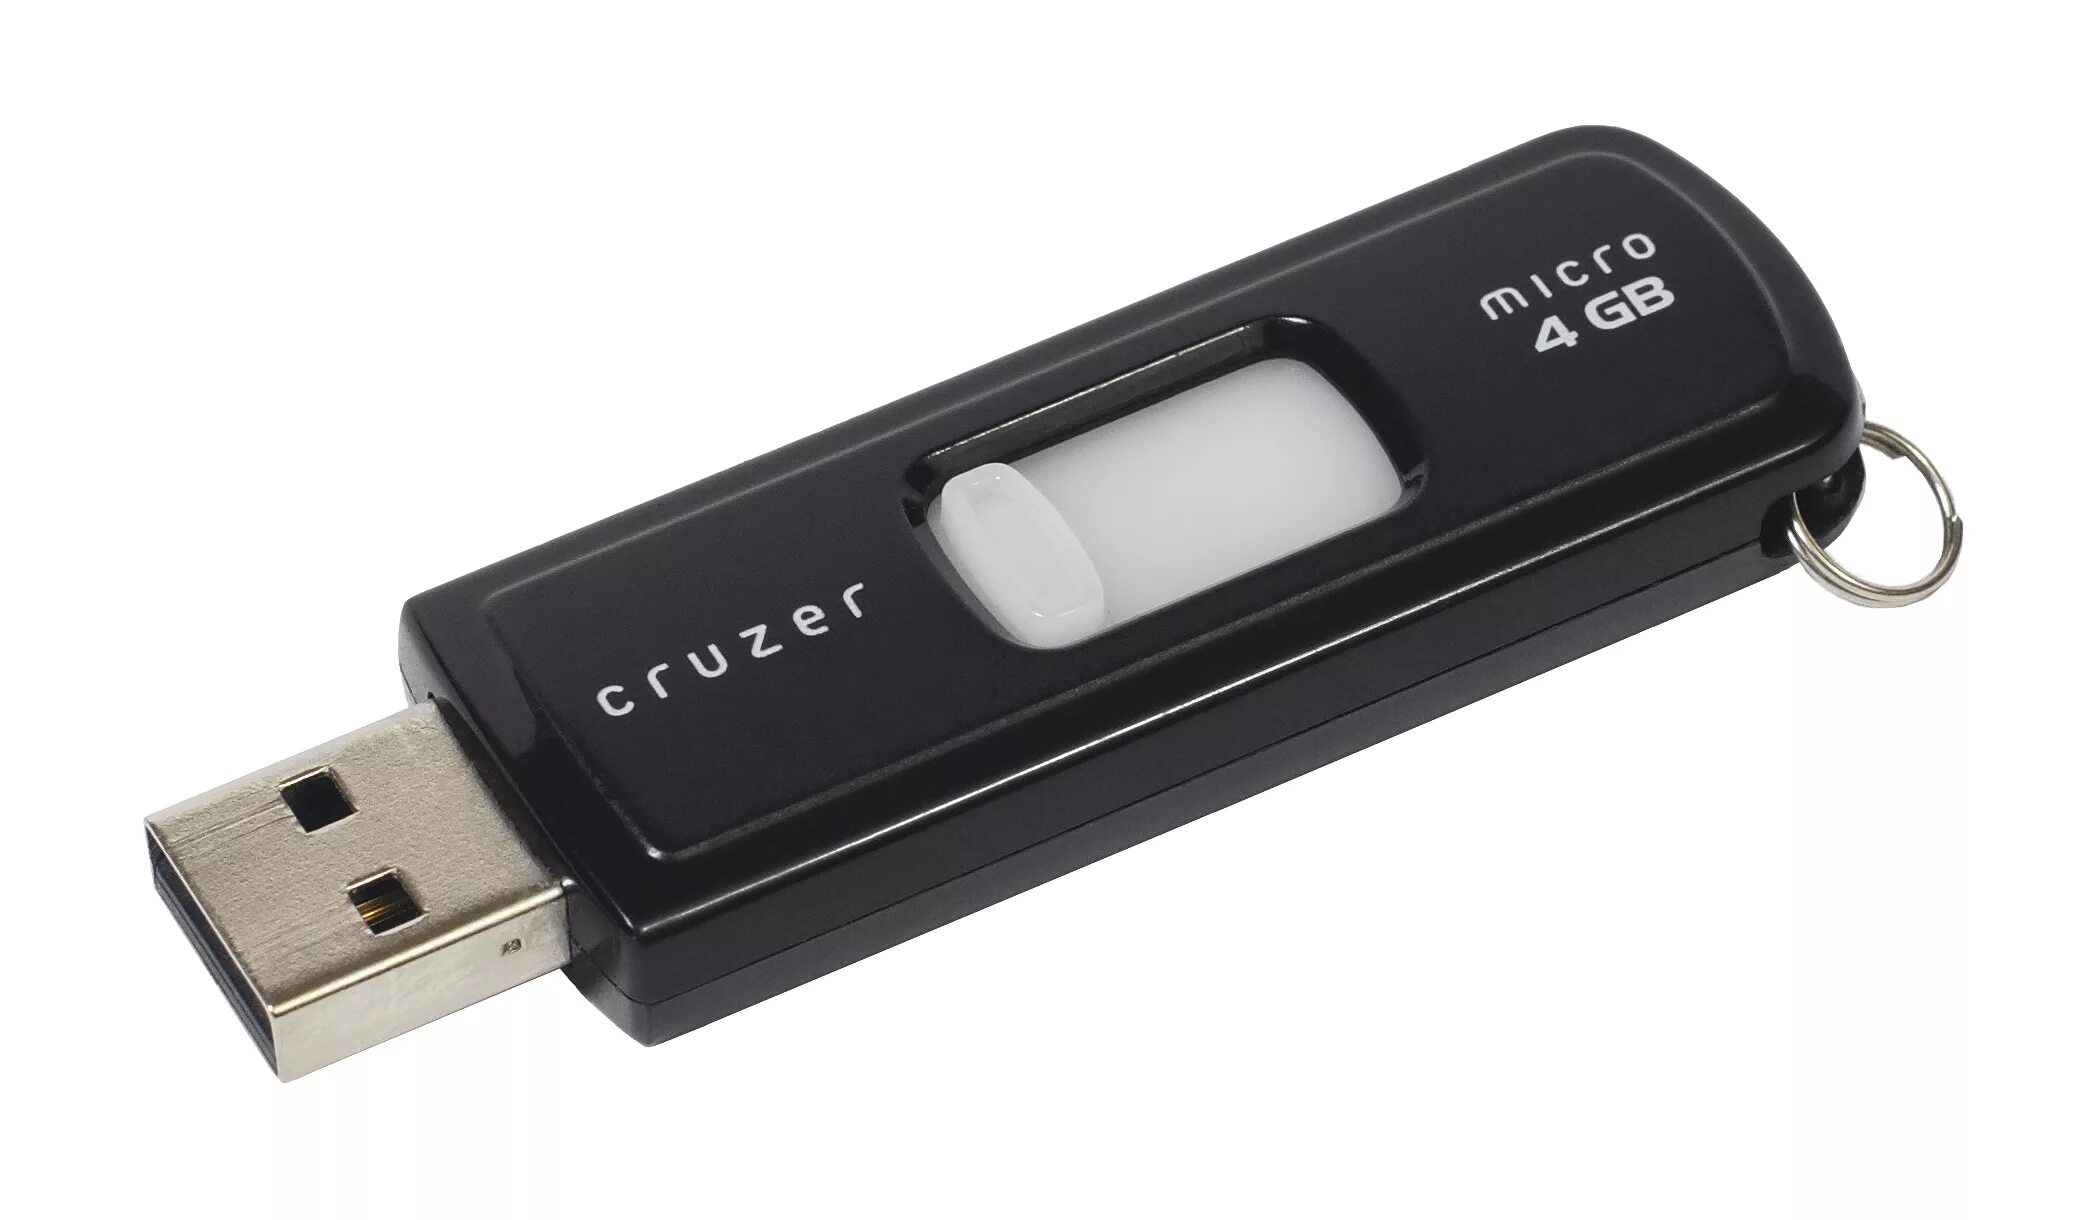 Флешка SANDISK 4gb. Флешка 16гб USB тайп. SANDISK Cruzer Micro 4gb. USB Flash накопитель 4 GB.